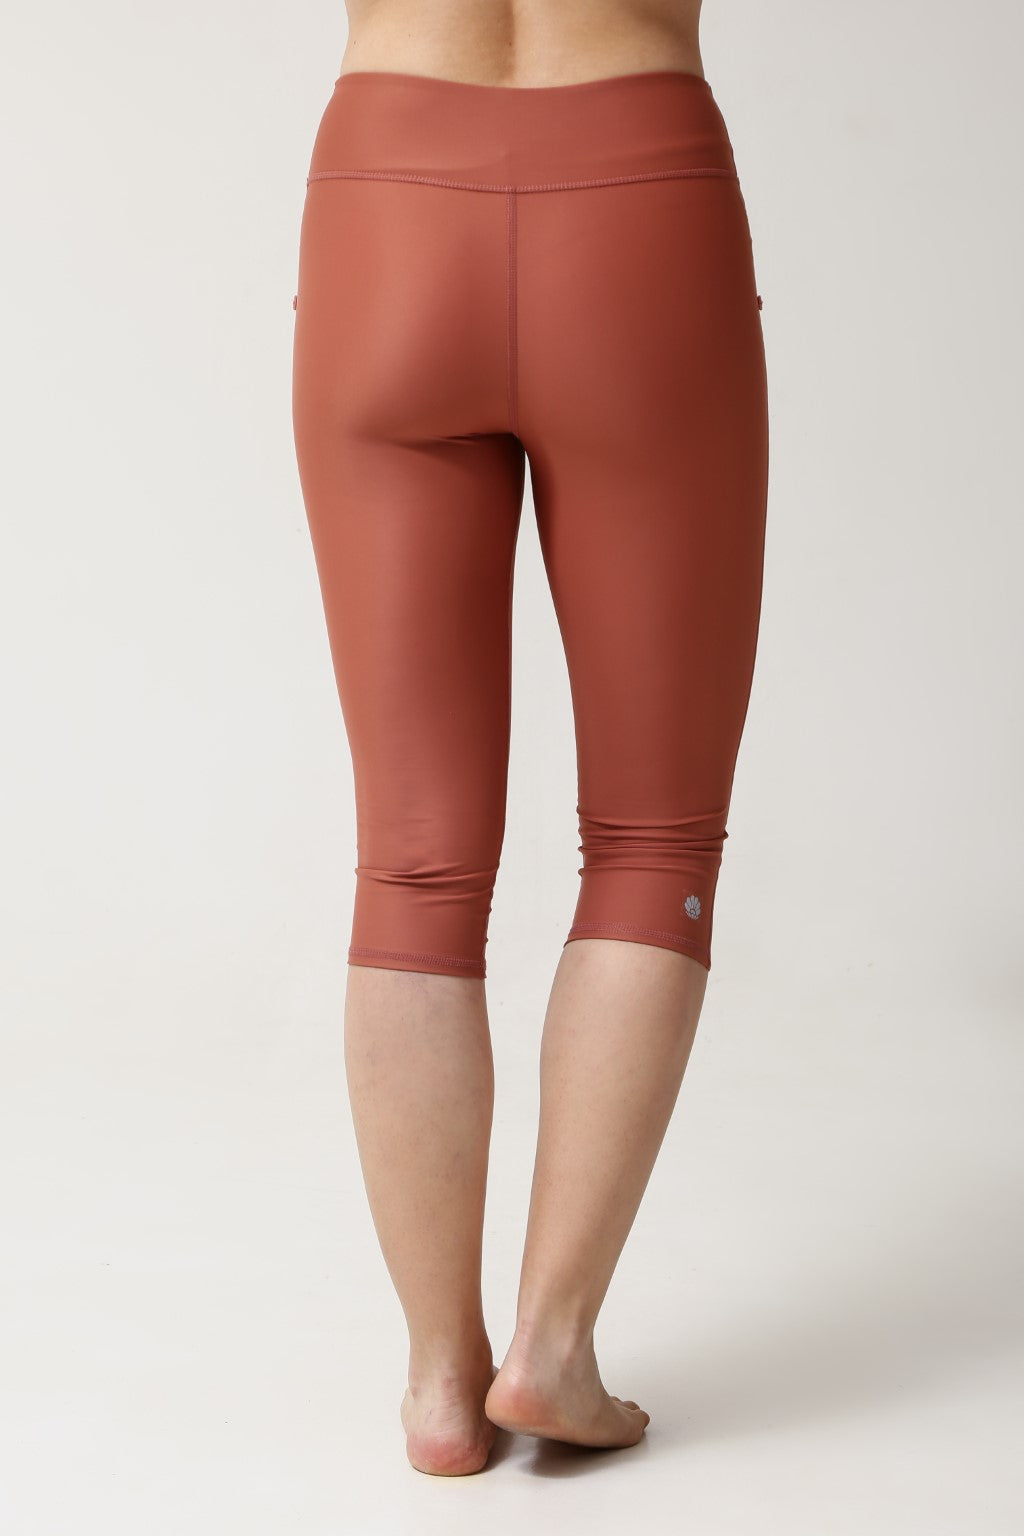 Lanuuk Capri Swim Tights - Clay | Cropped Shorts Swimming Leggings Modest Swimwear Burkini